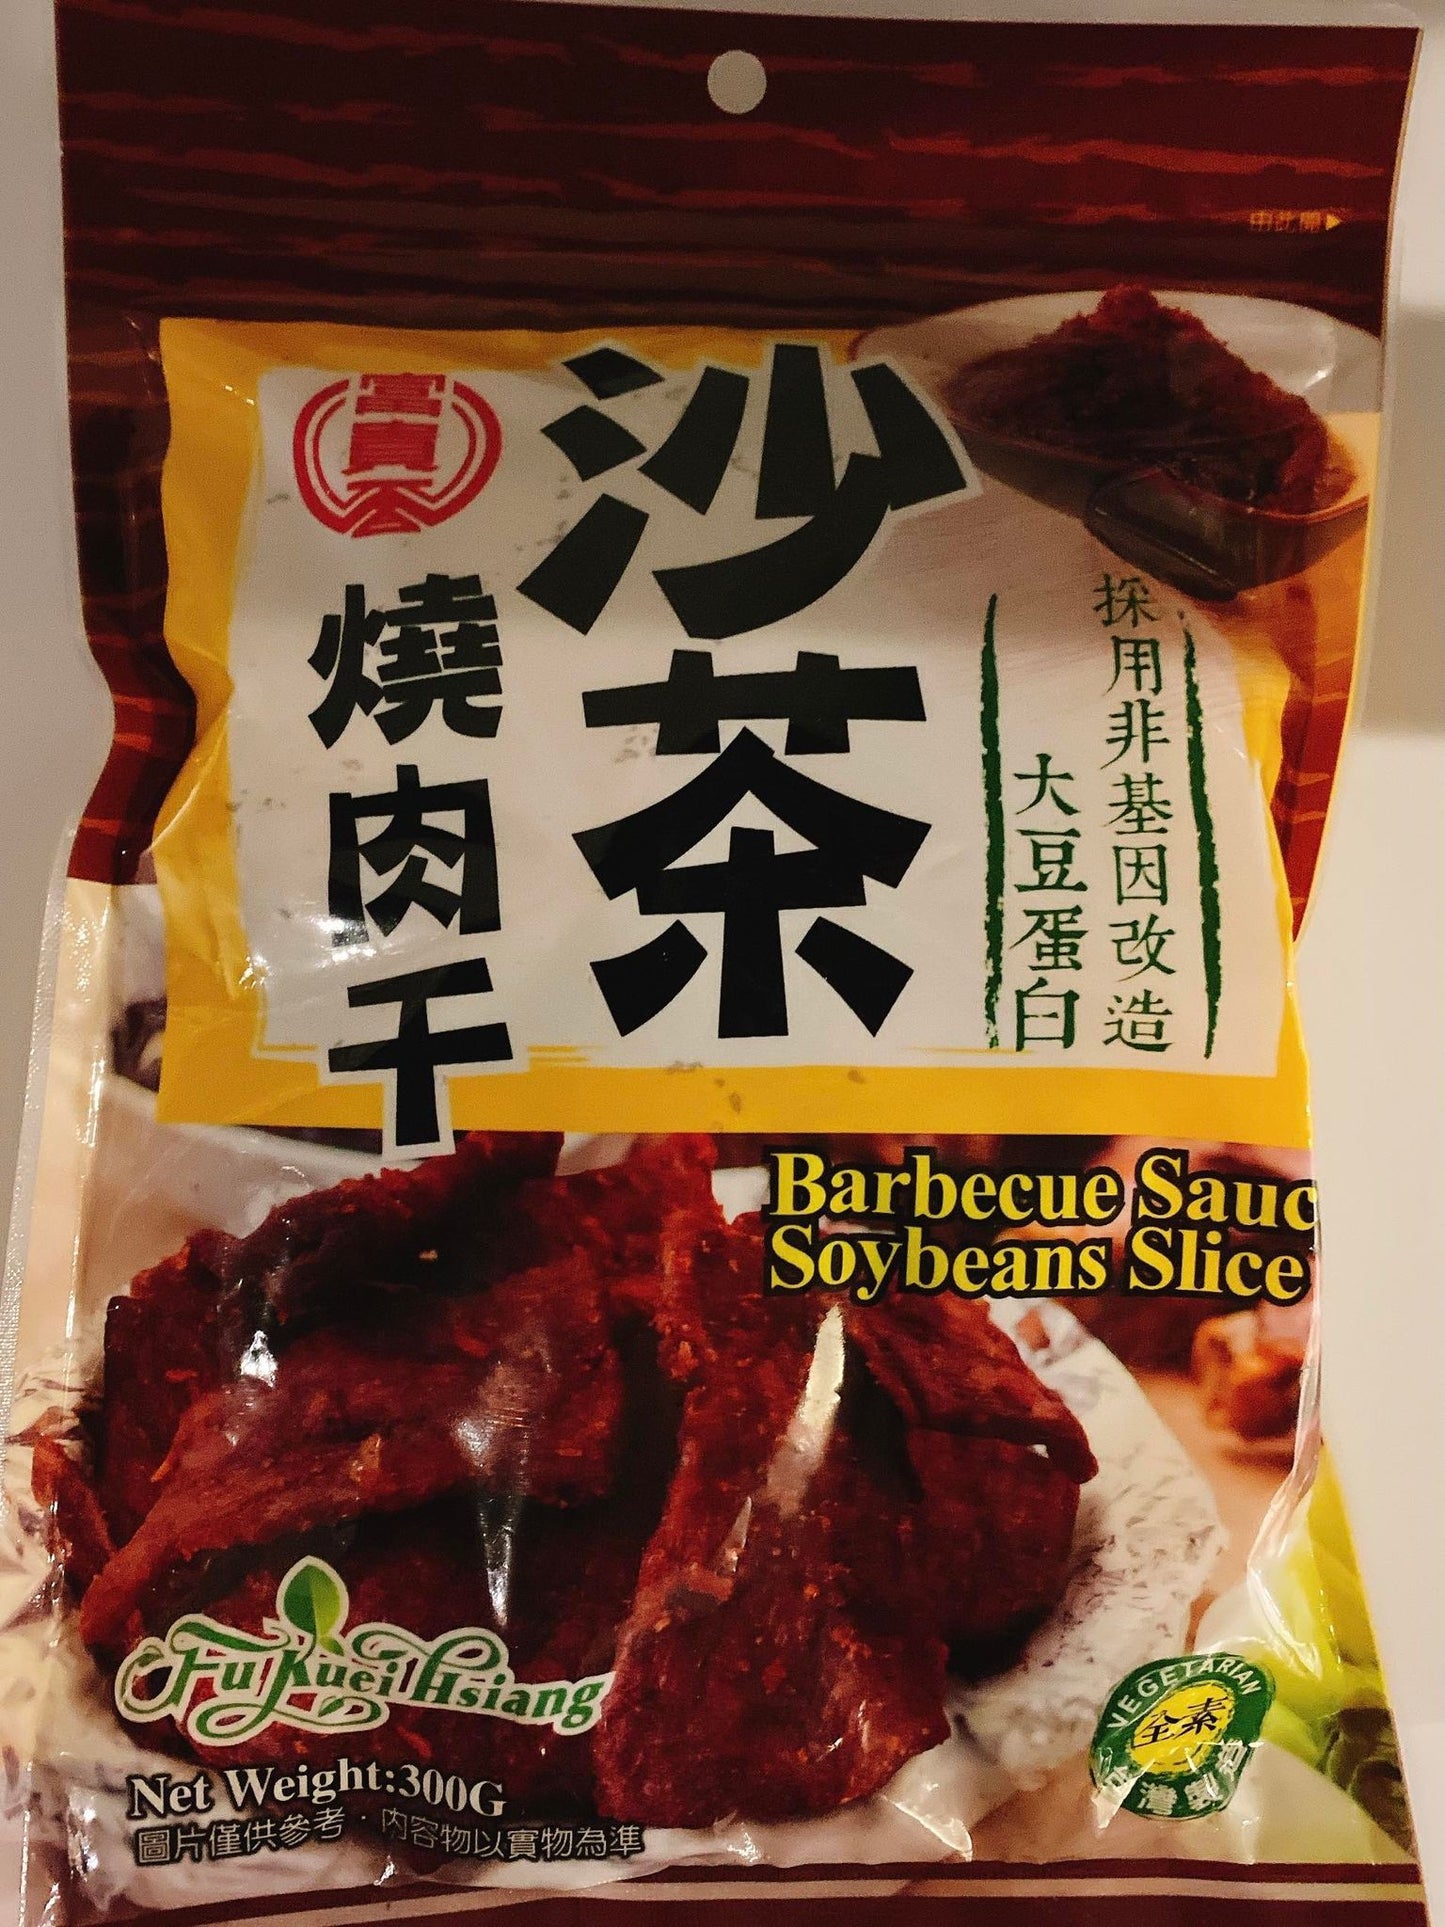 Barbecue Sauce Soybeans Slice (Vegan) [富貴香] 沙茶燒肉干 (全素)